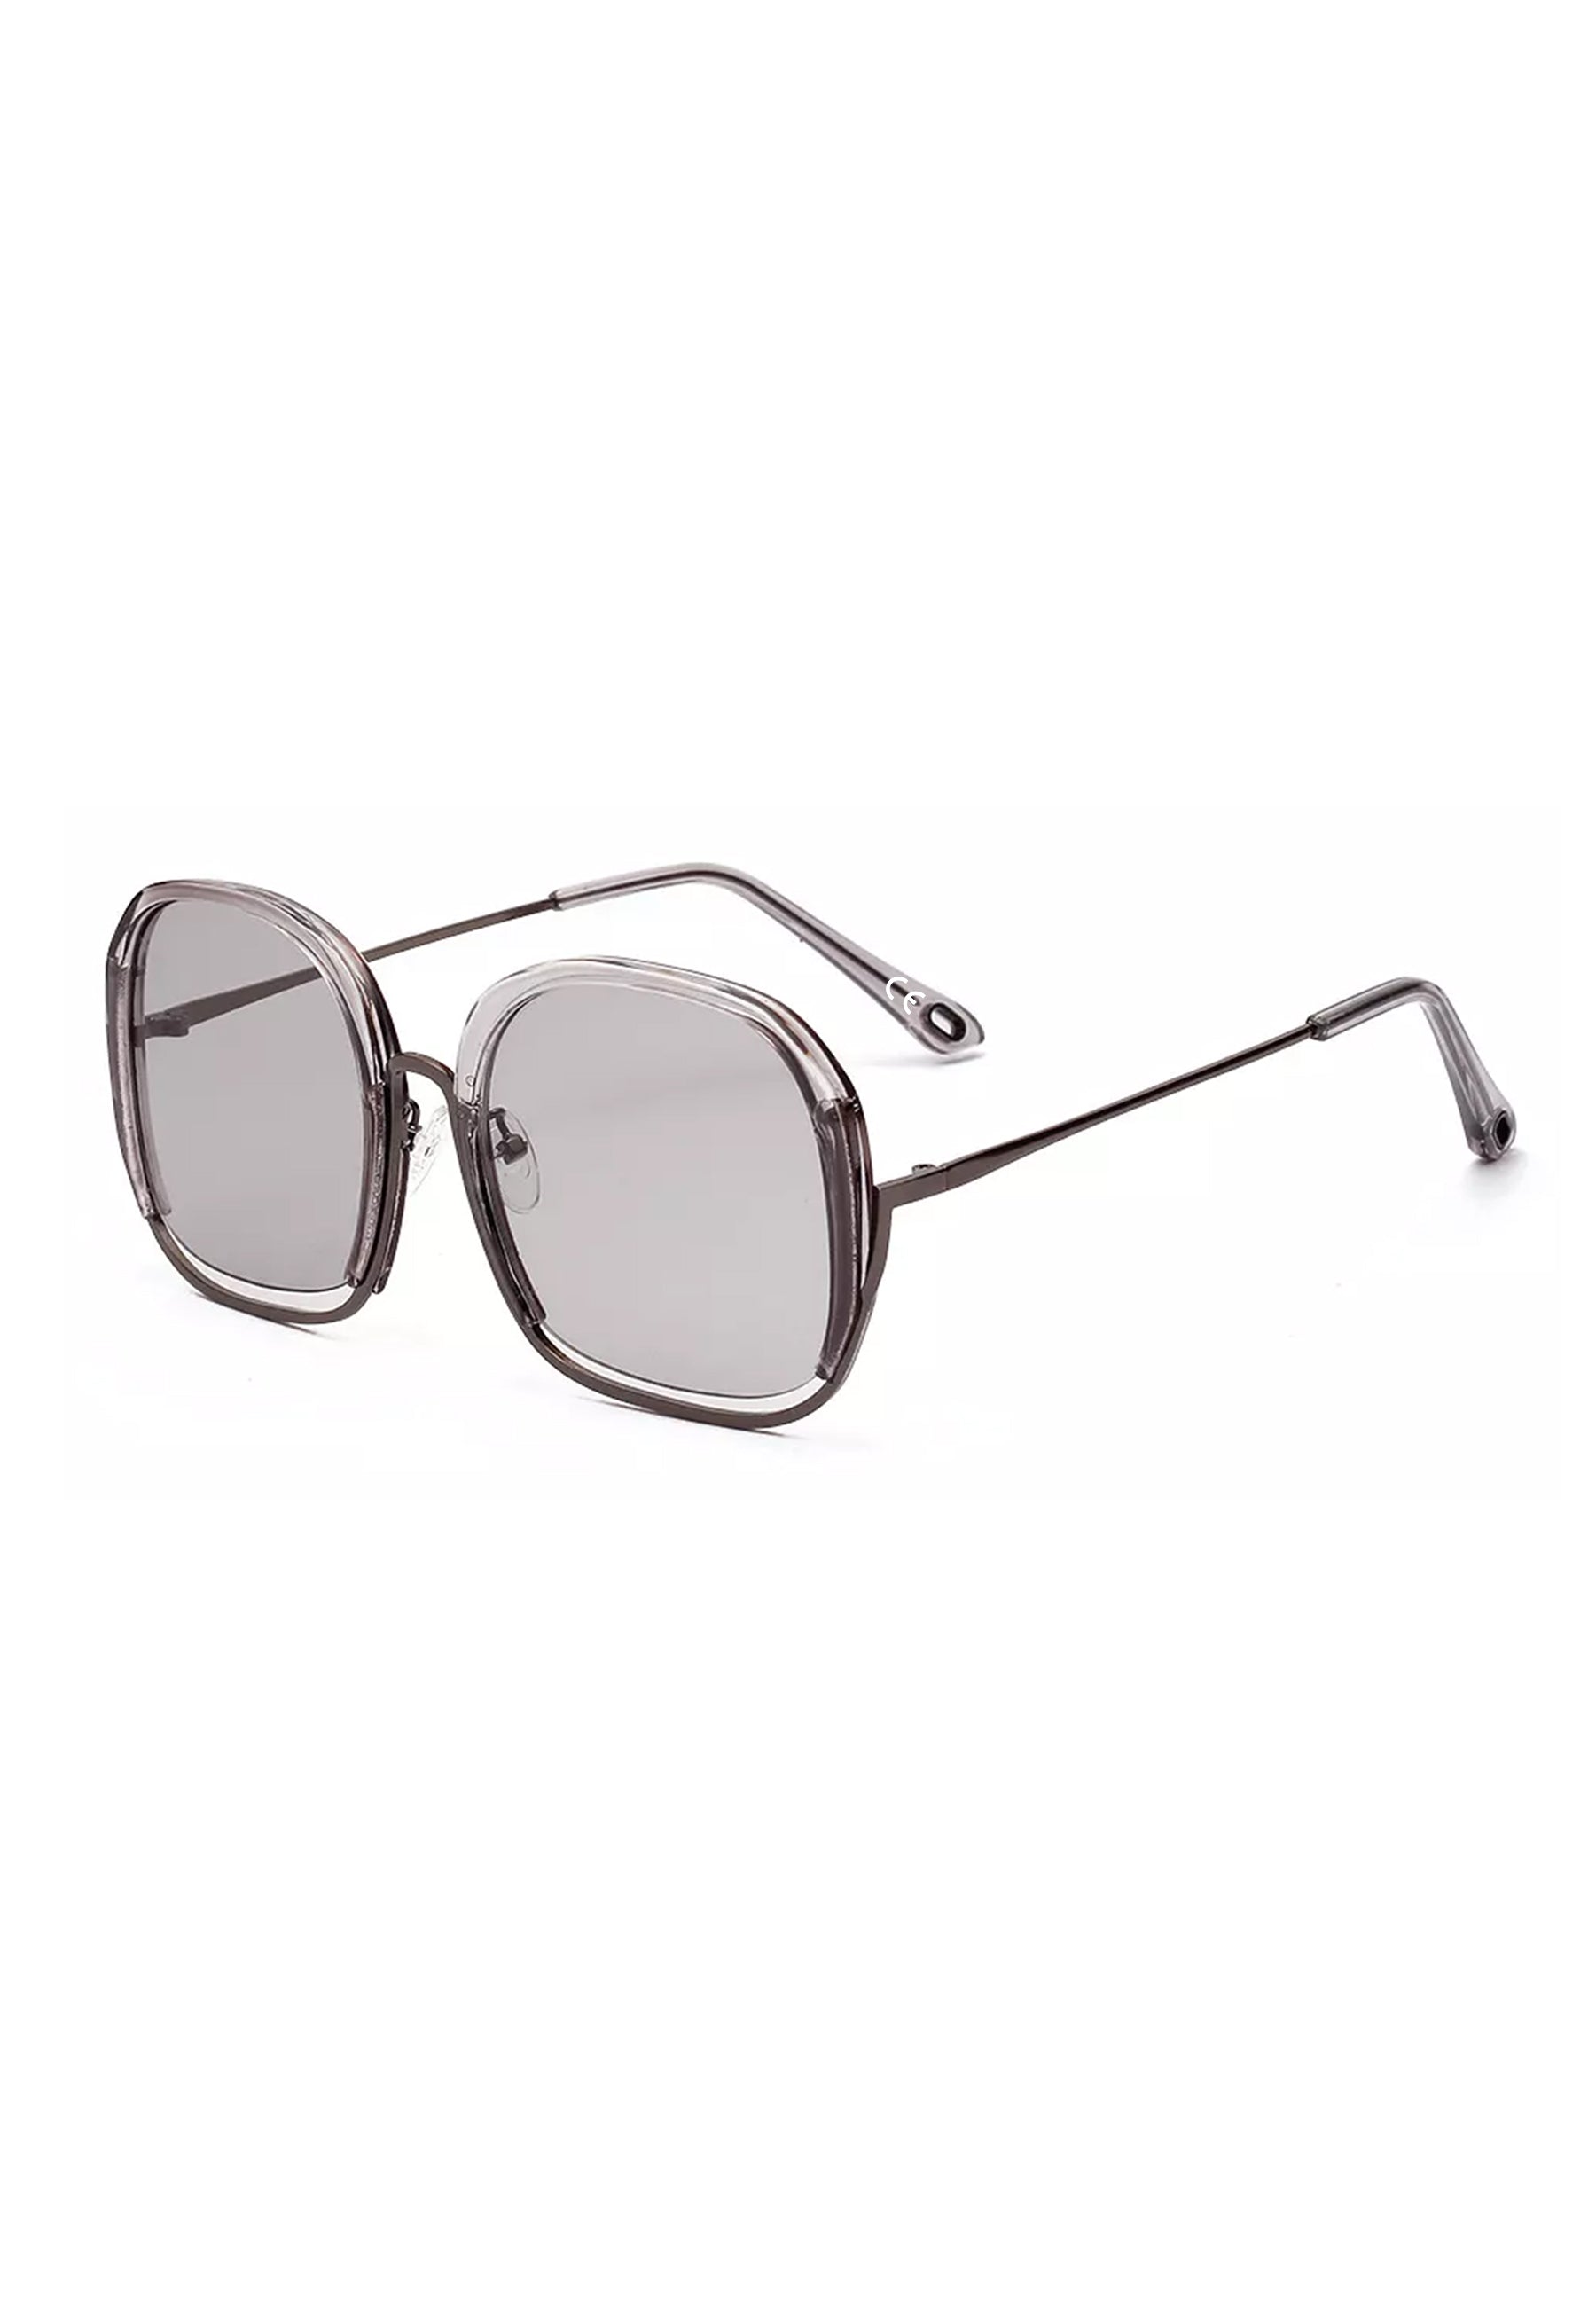 Avantgardistische Pariser quadratische, trendige Sonnenbrille